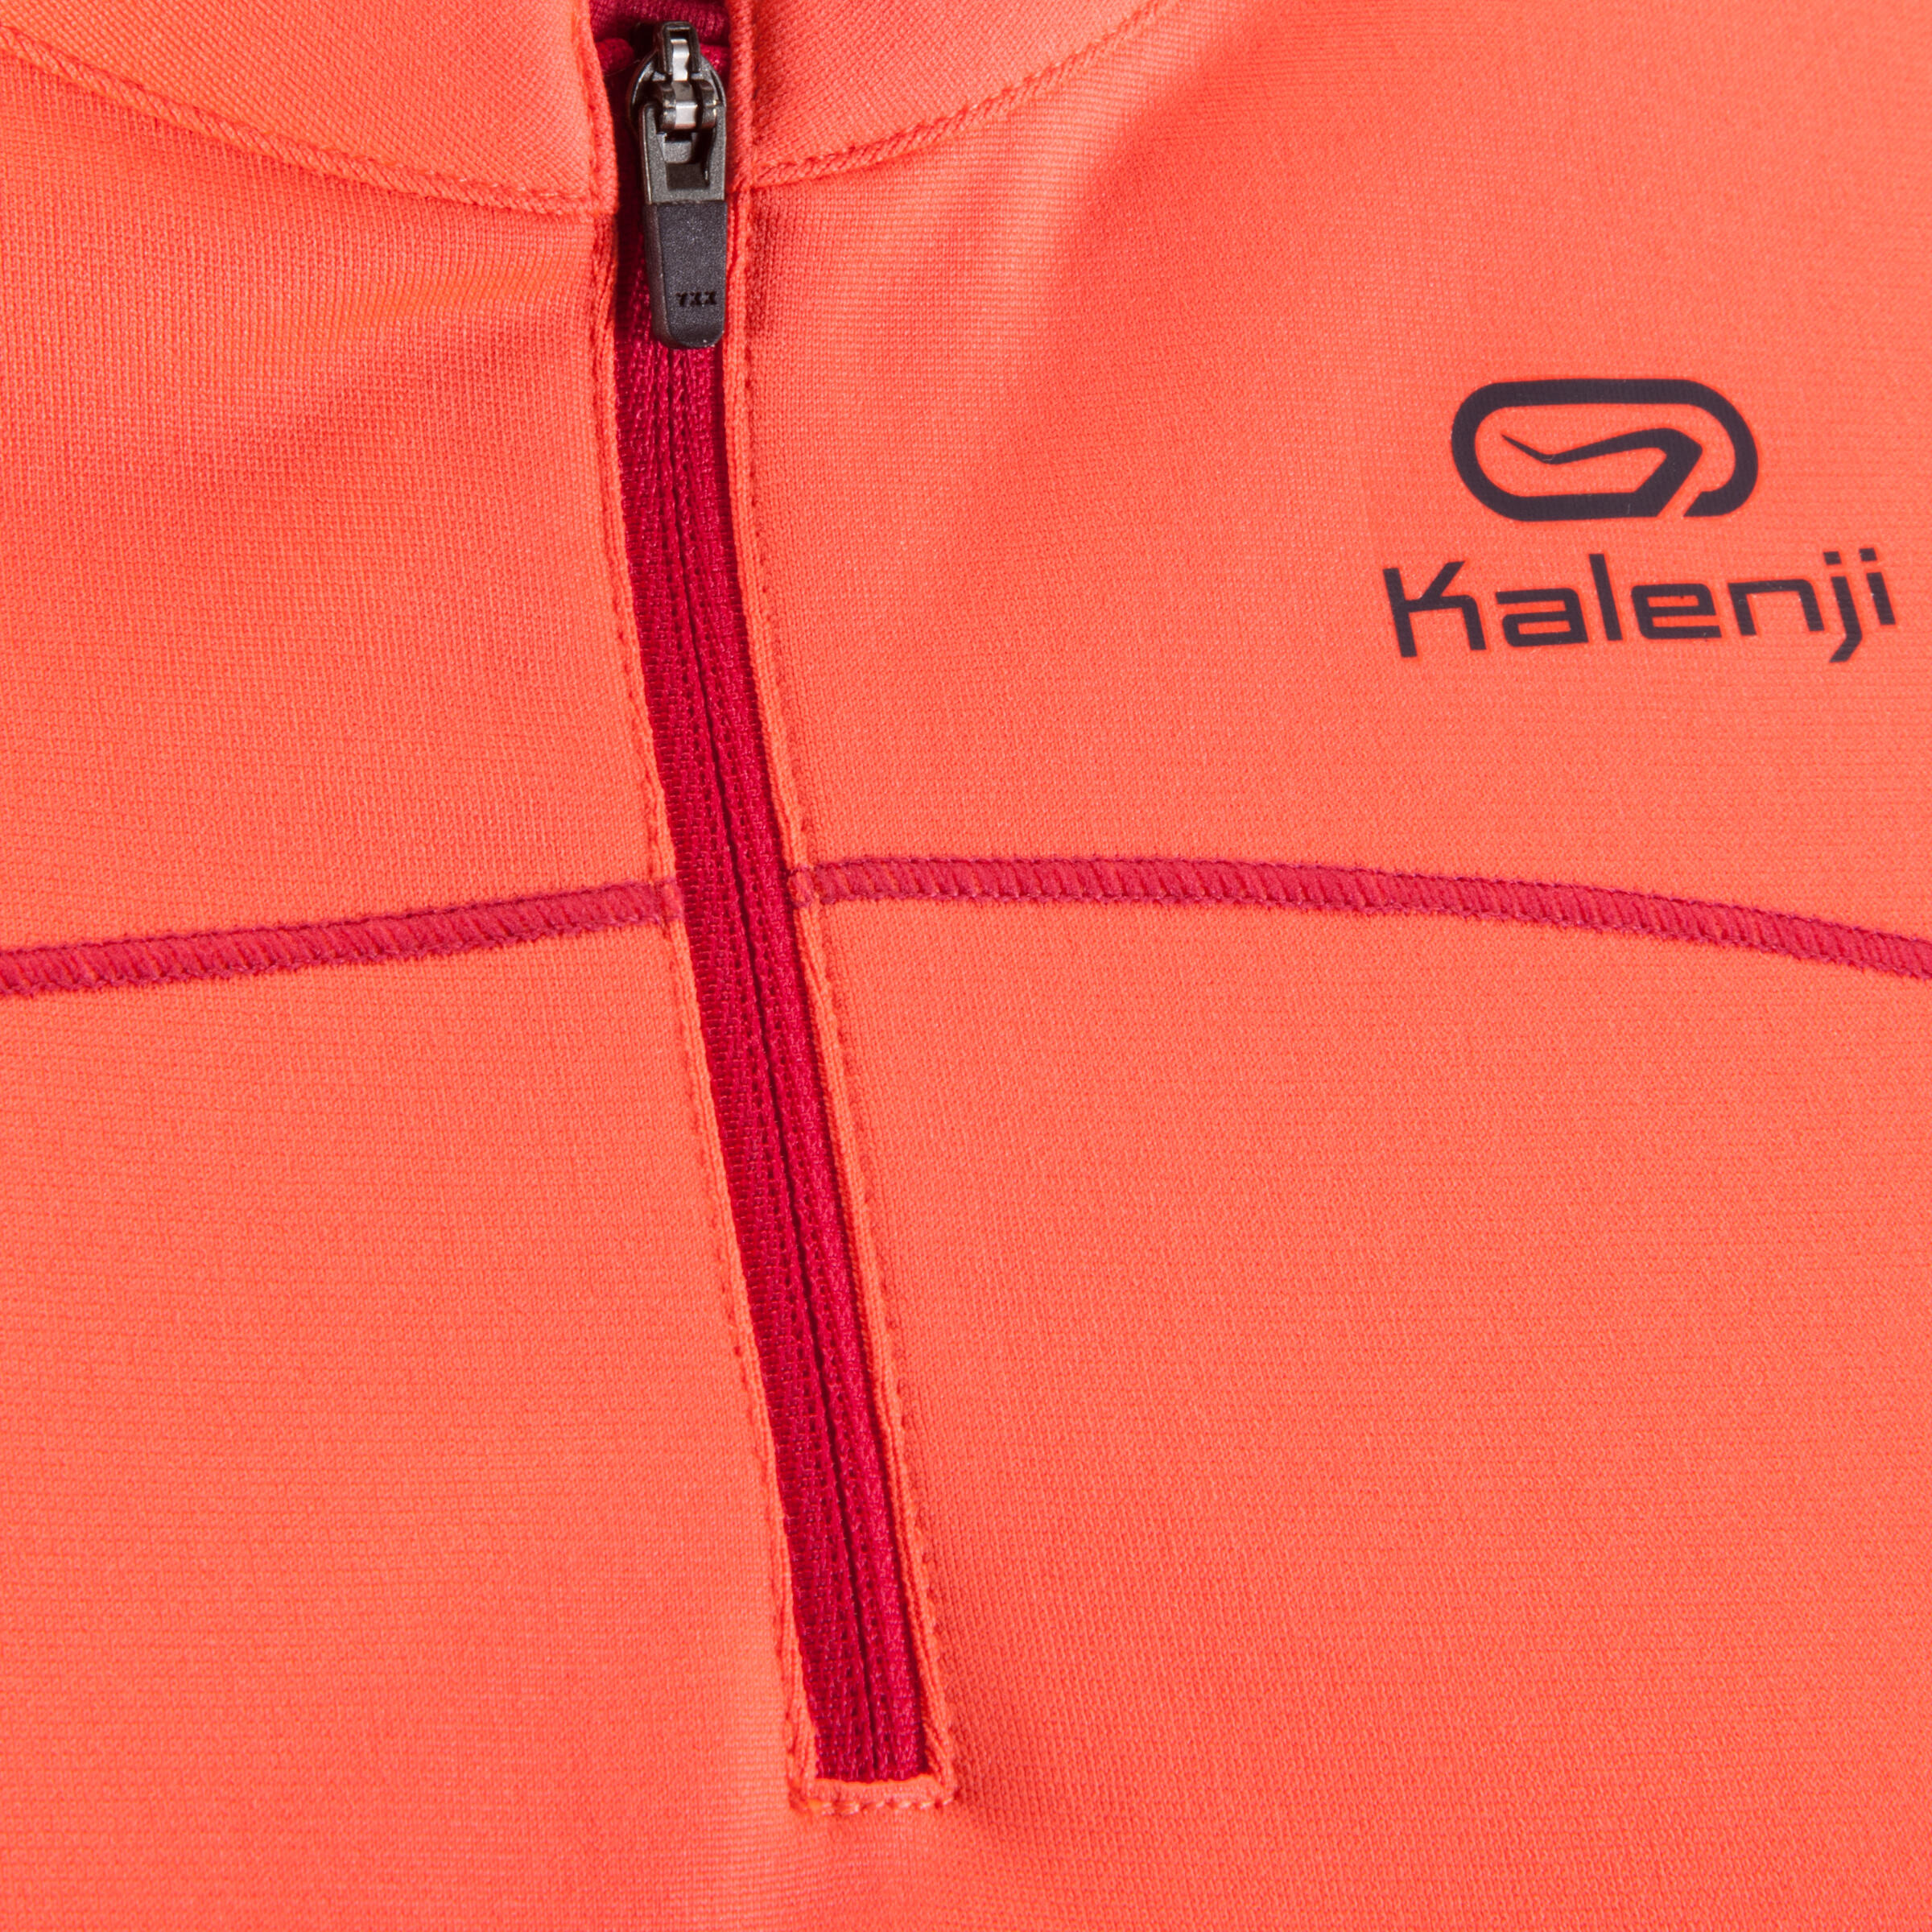 Kalenji Ekiden Women's Warm Long Sleeved Running Jersey - Orange/Grey 4/8